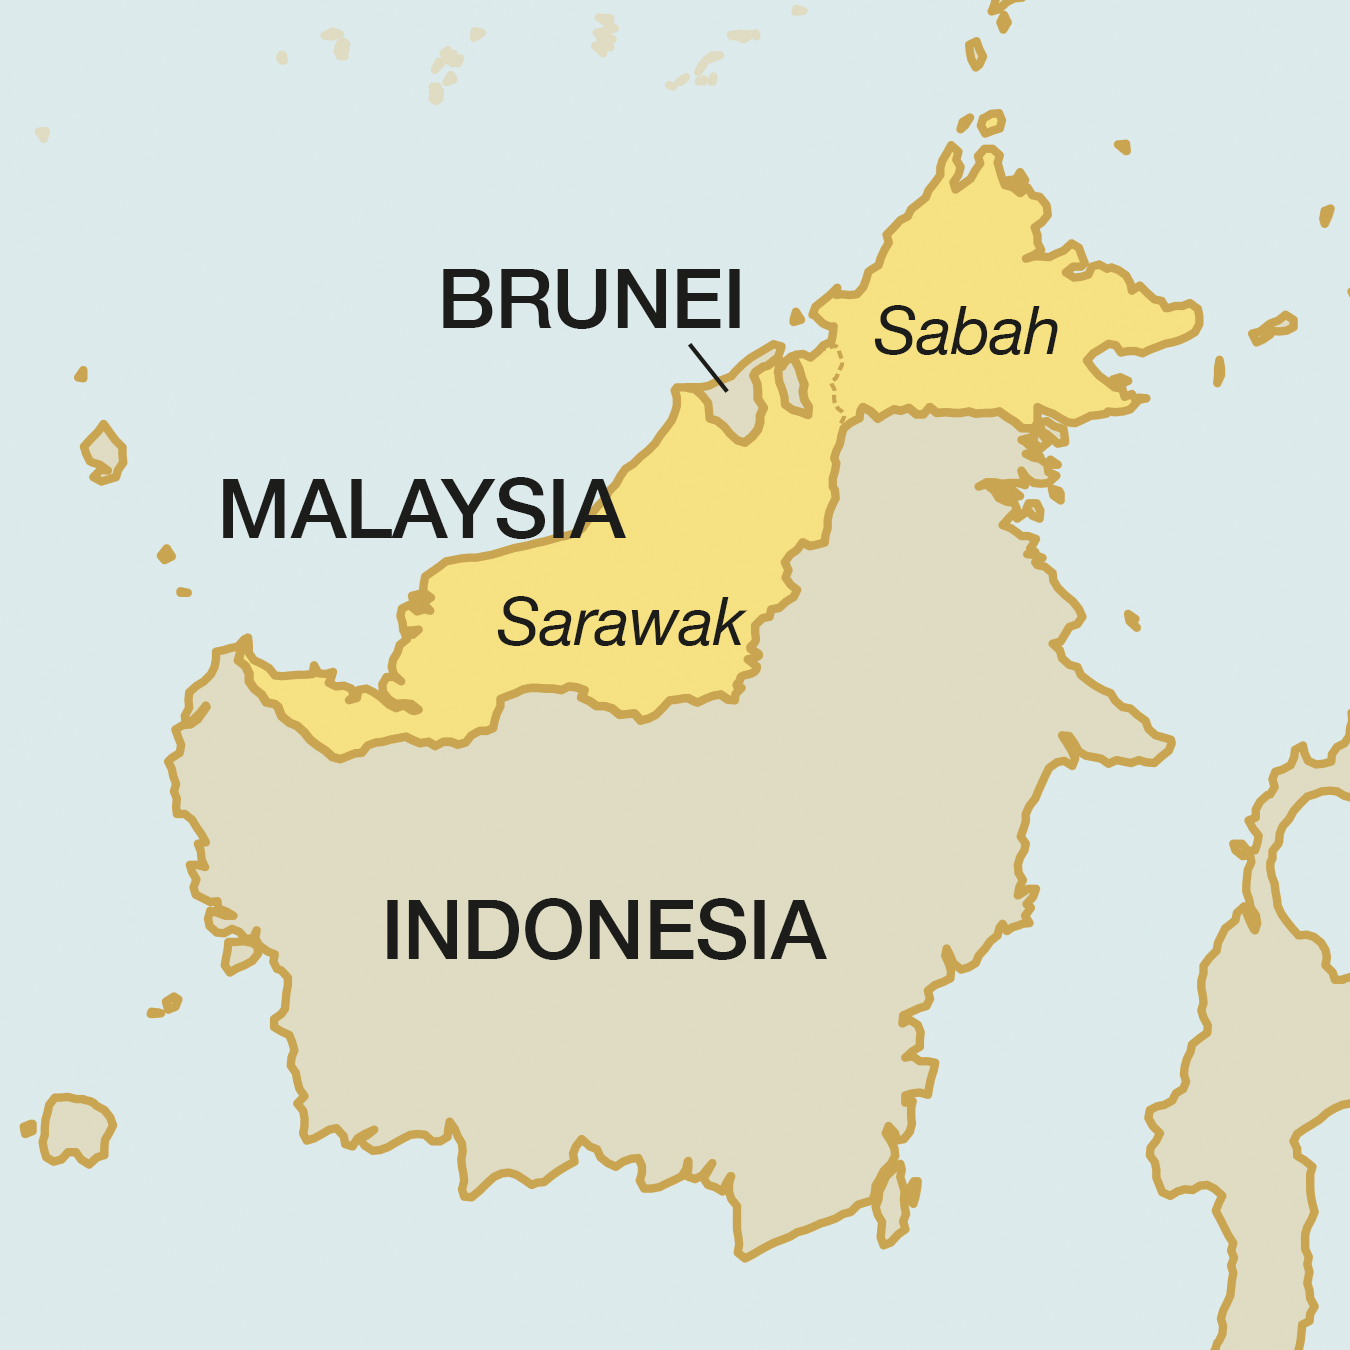 The island of Borneo